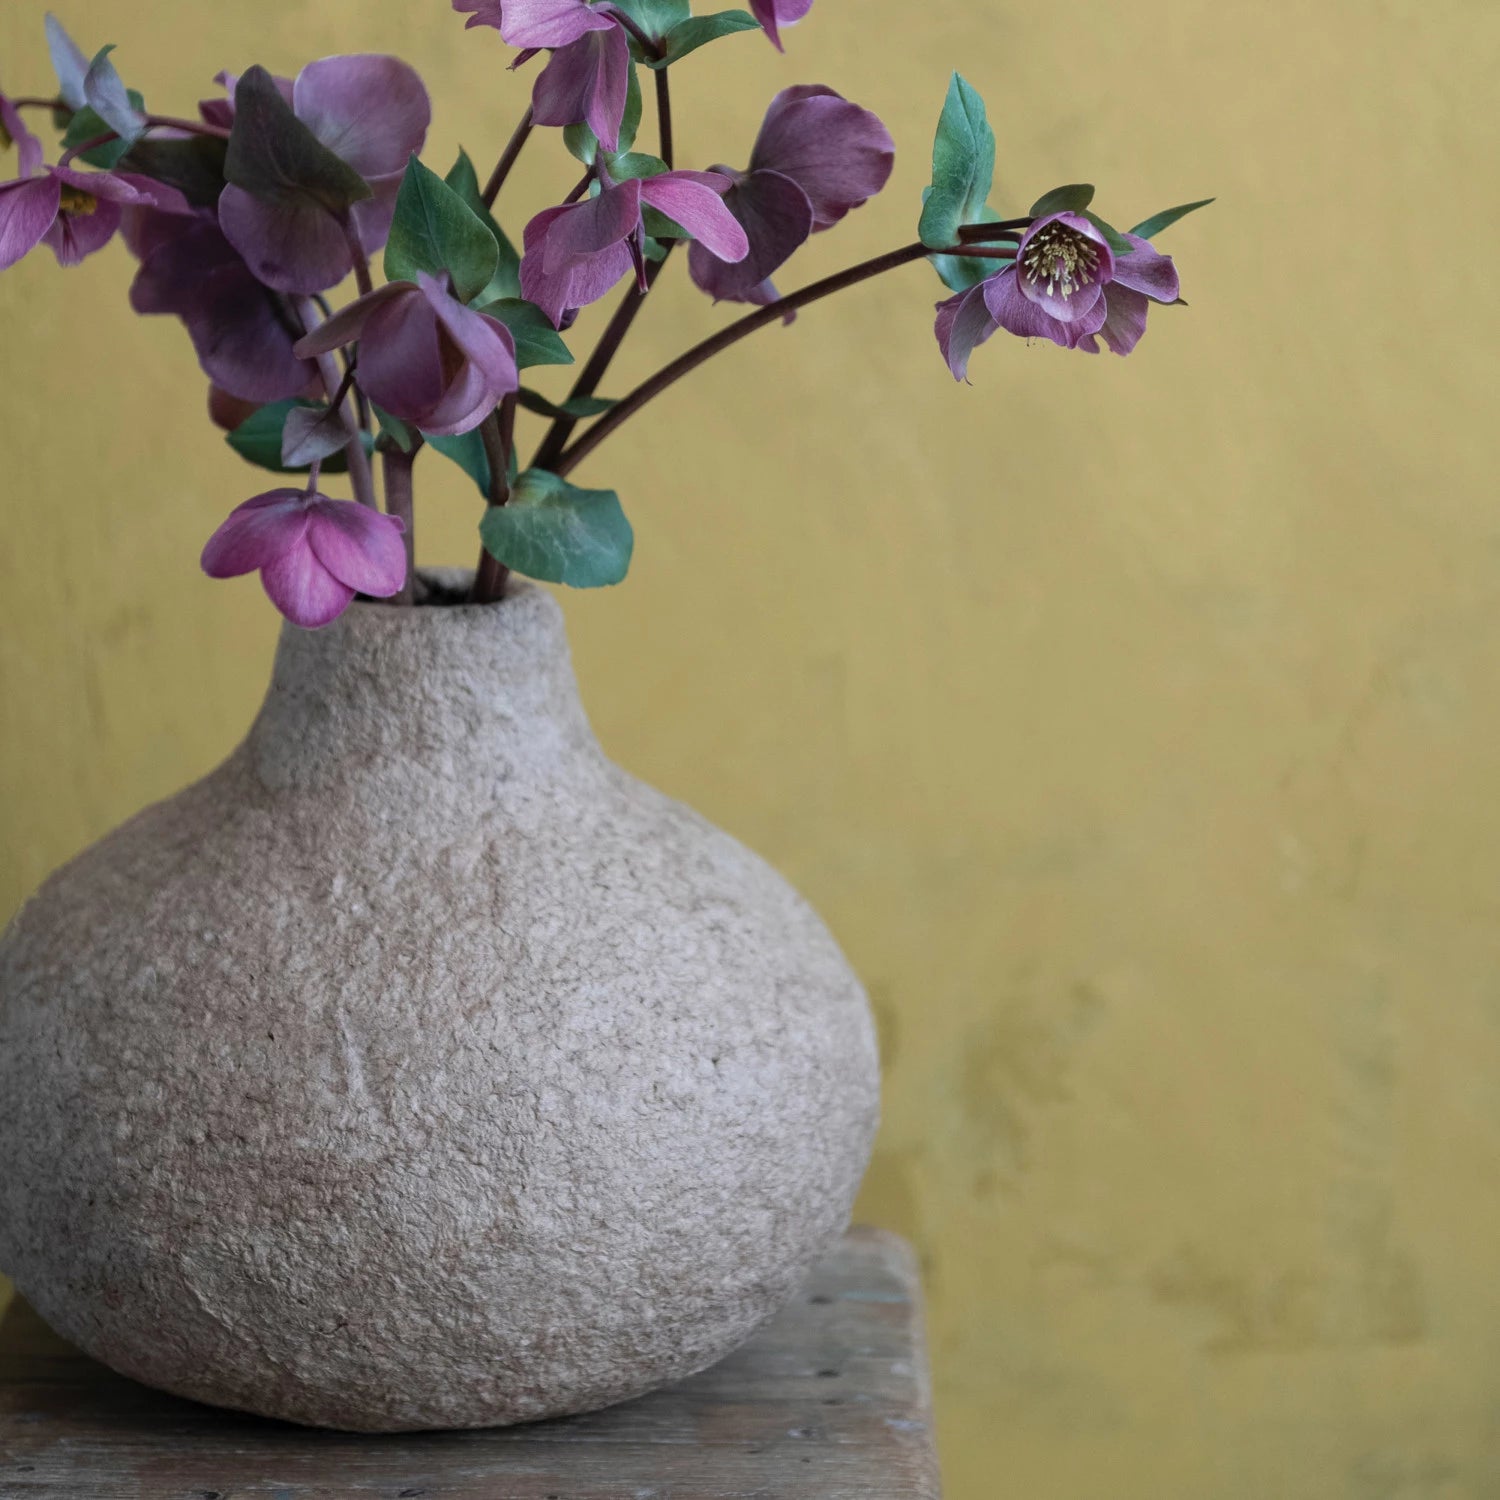 Decorative Handmade Paper Mache Vase